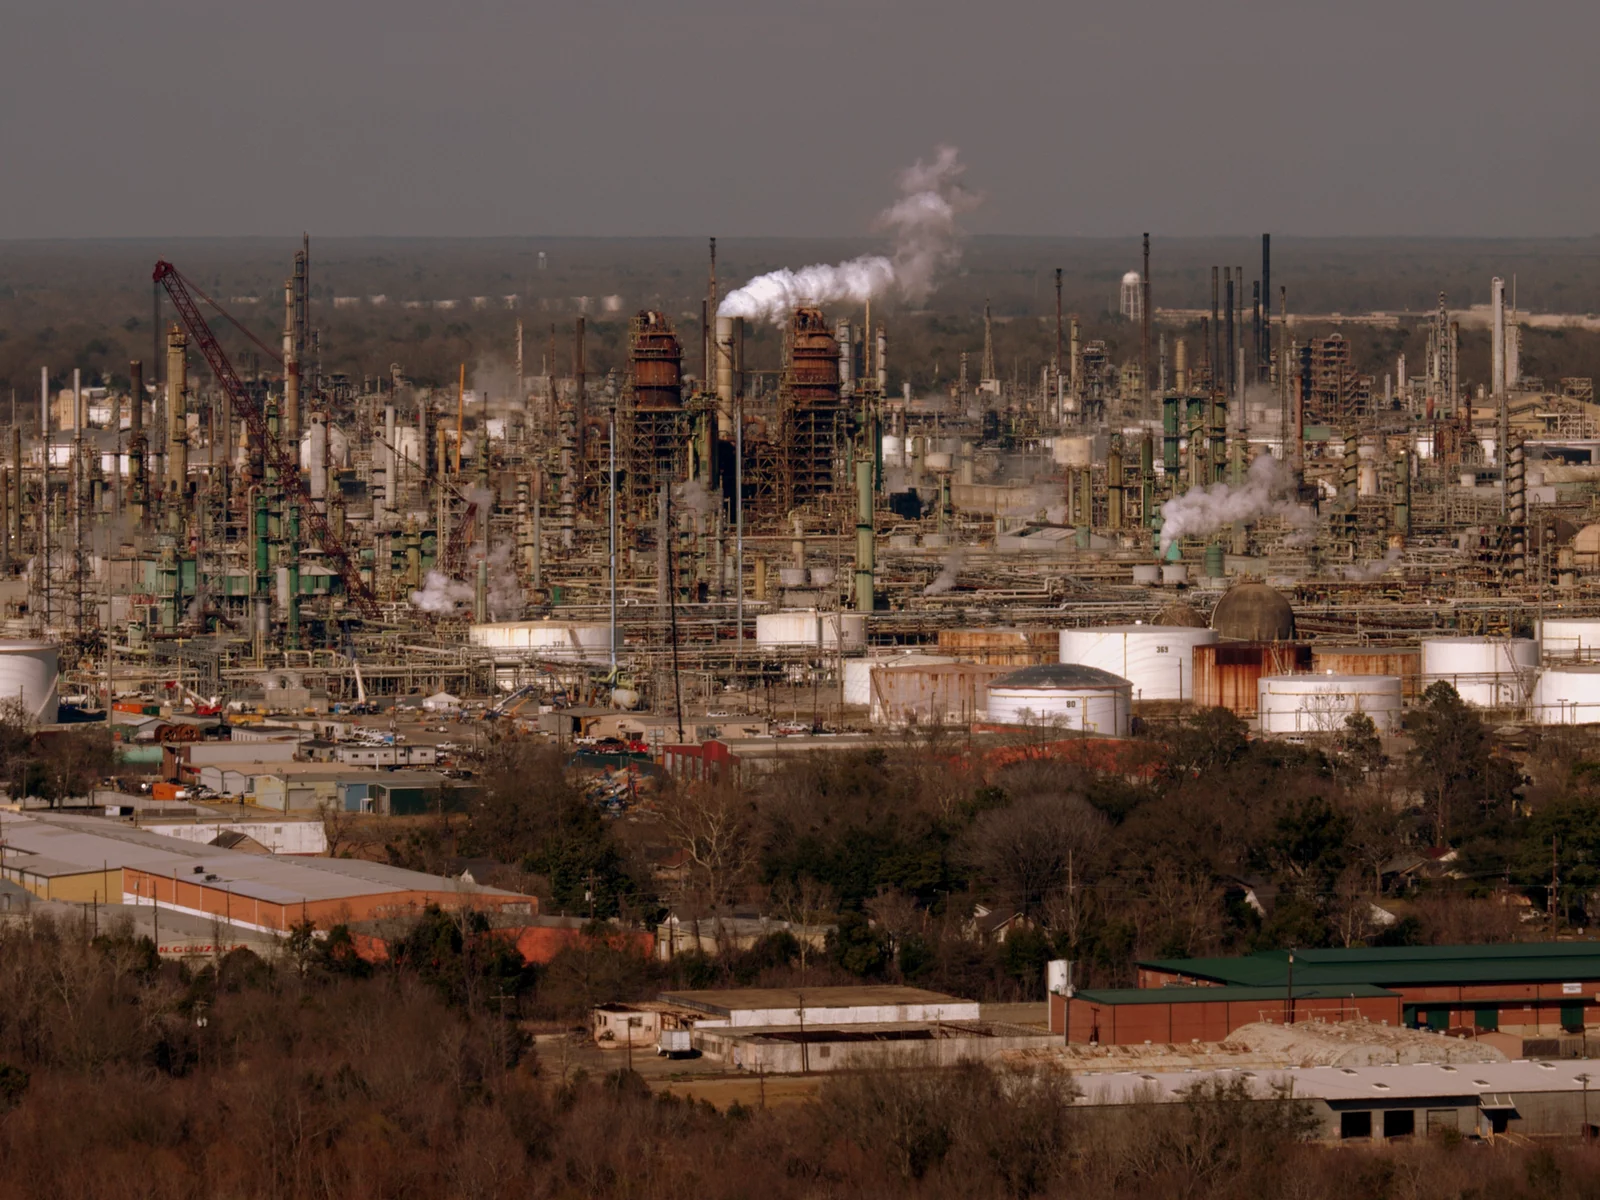 ExxonMobil Baton Rouge Plant